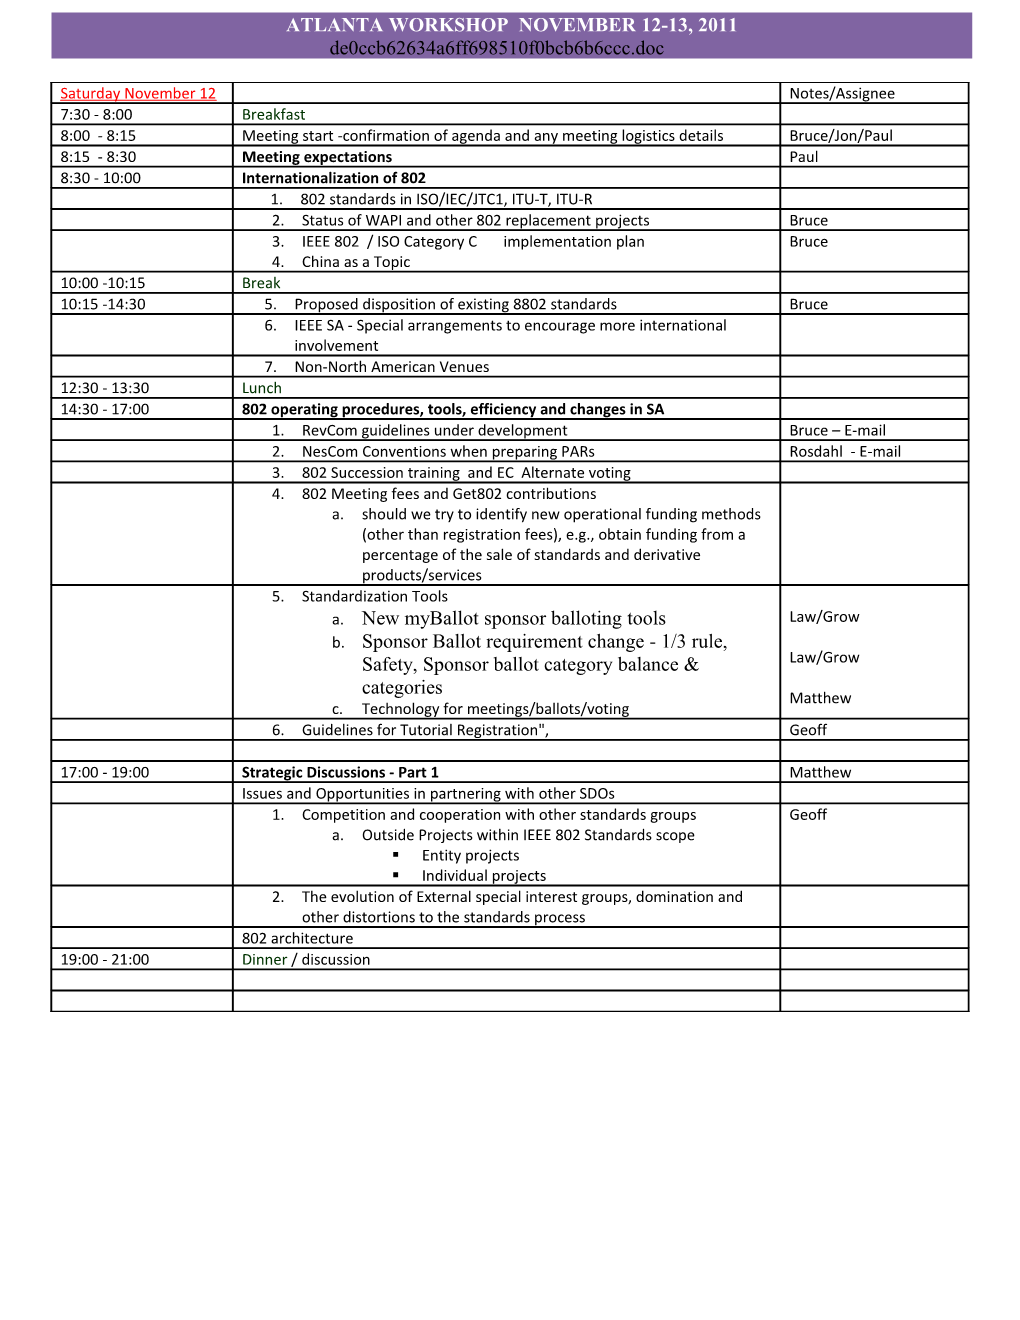 November EC Workshop Agenda